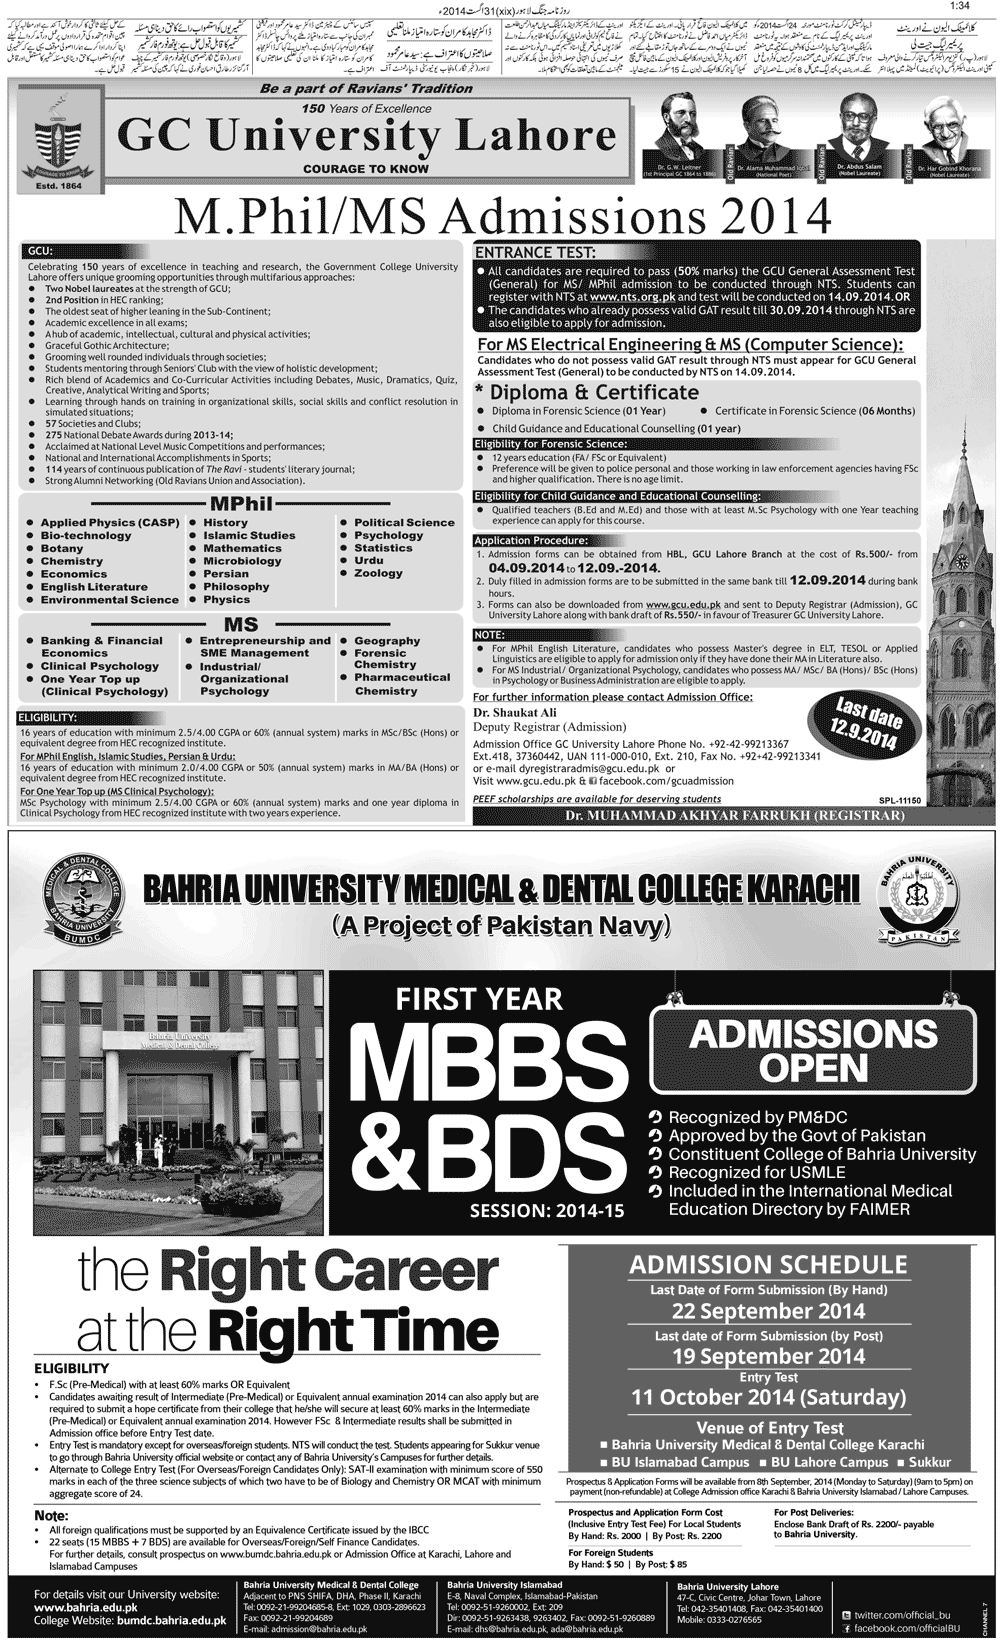 Bahria University Medical and Dental College Karachi Admission 2014